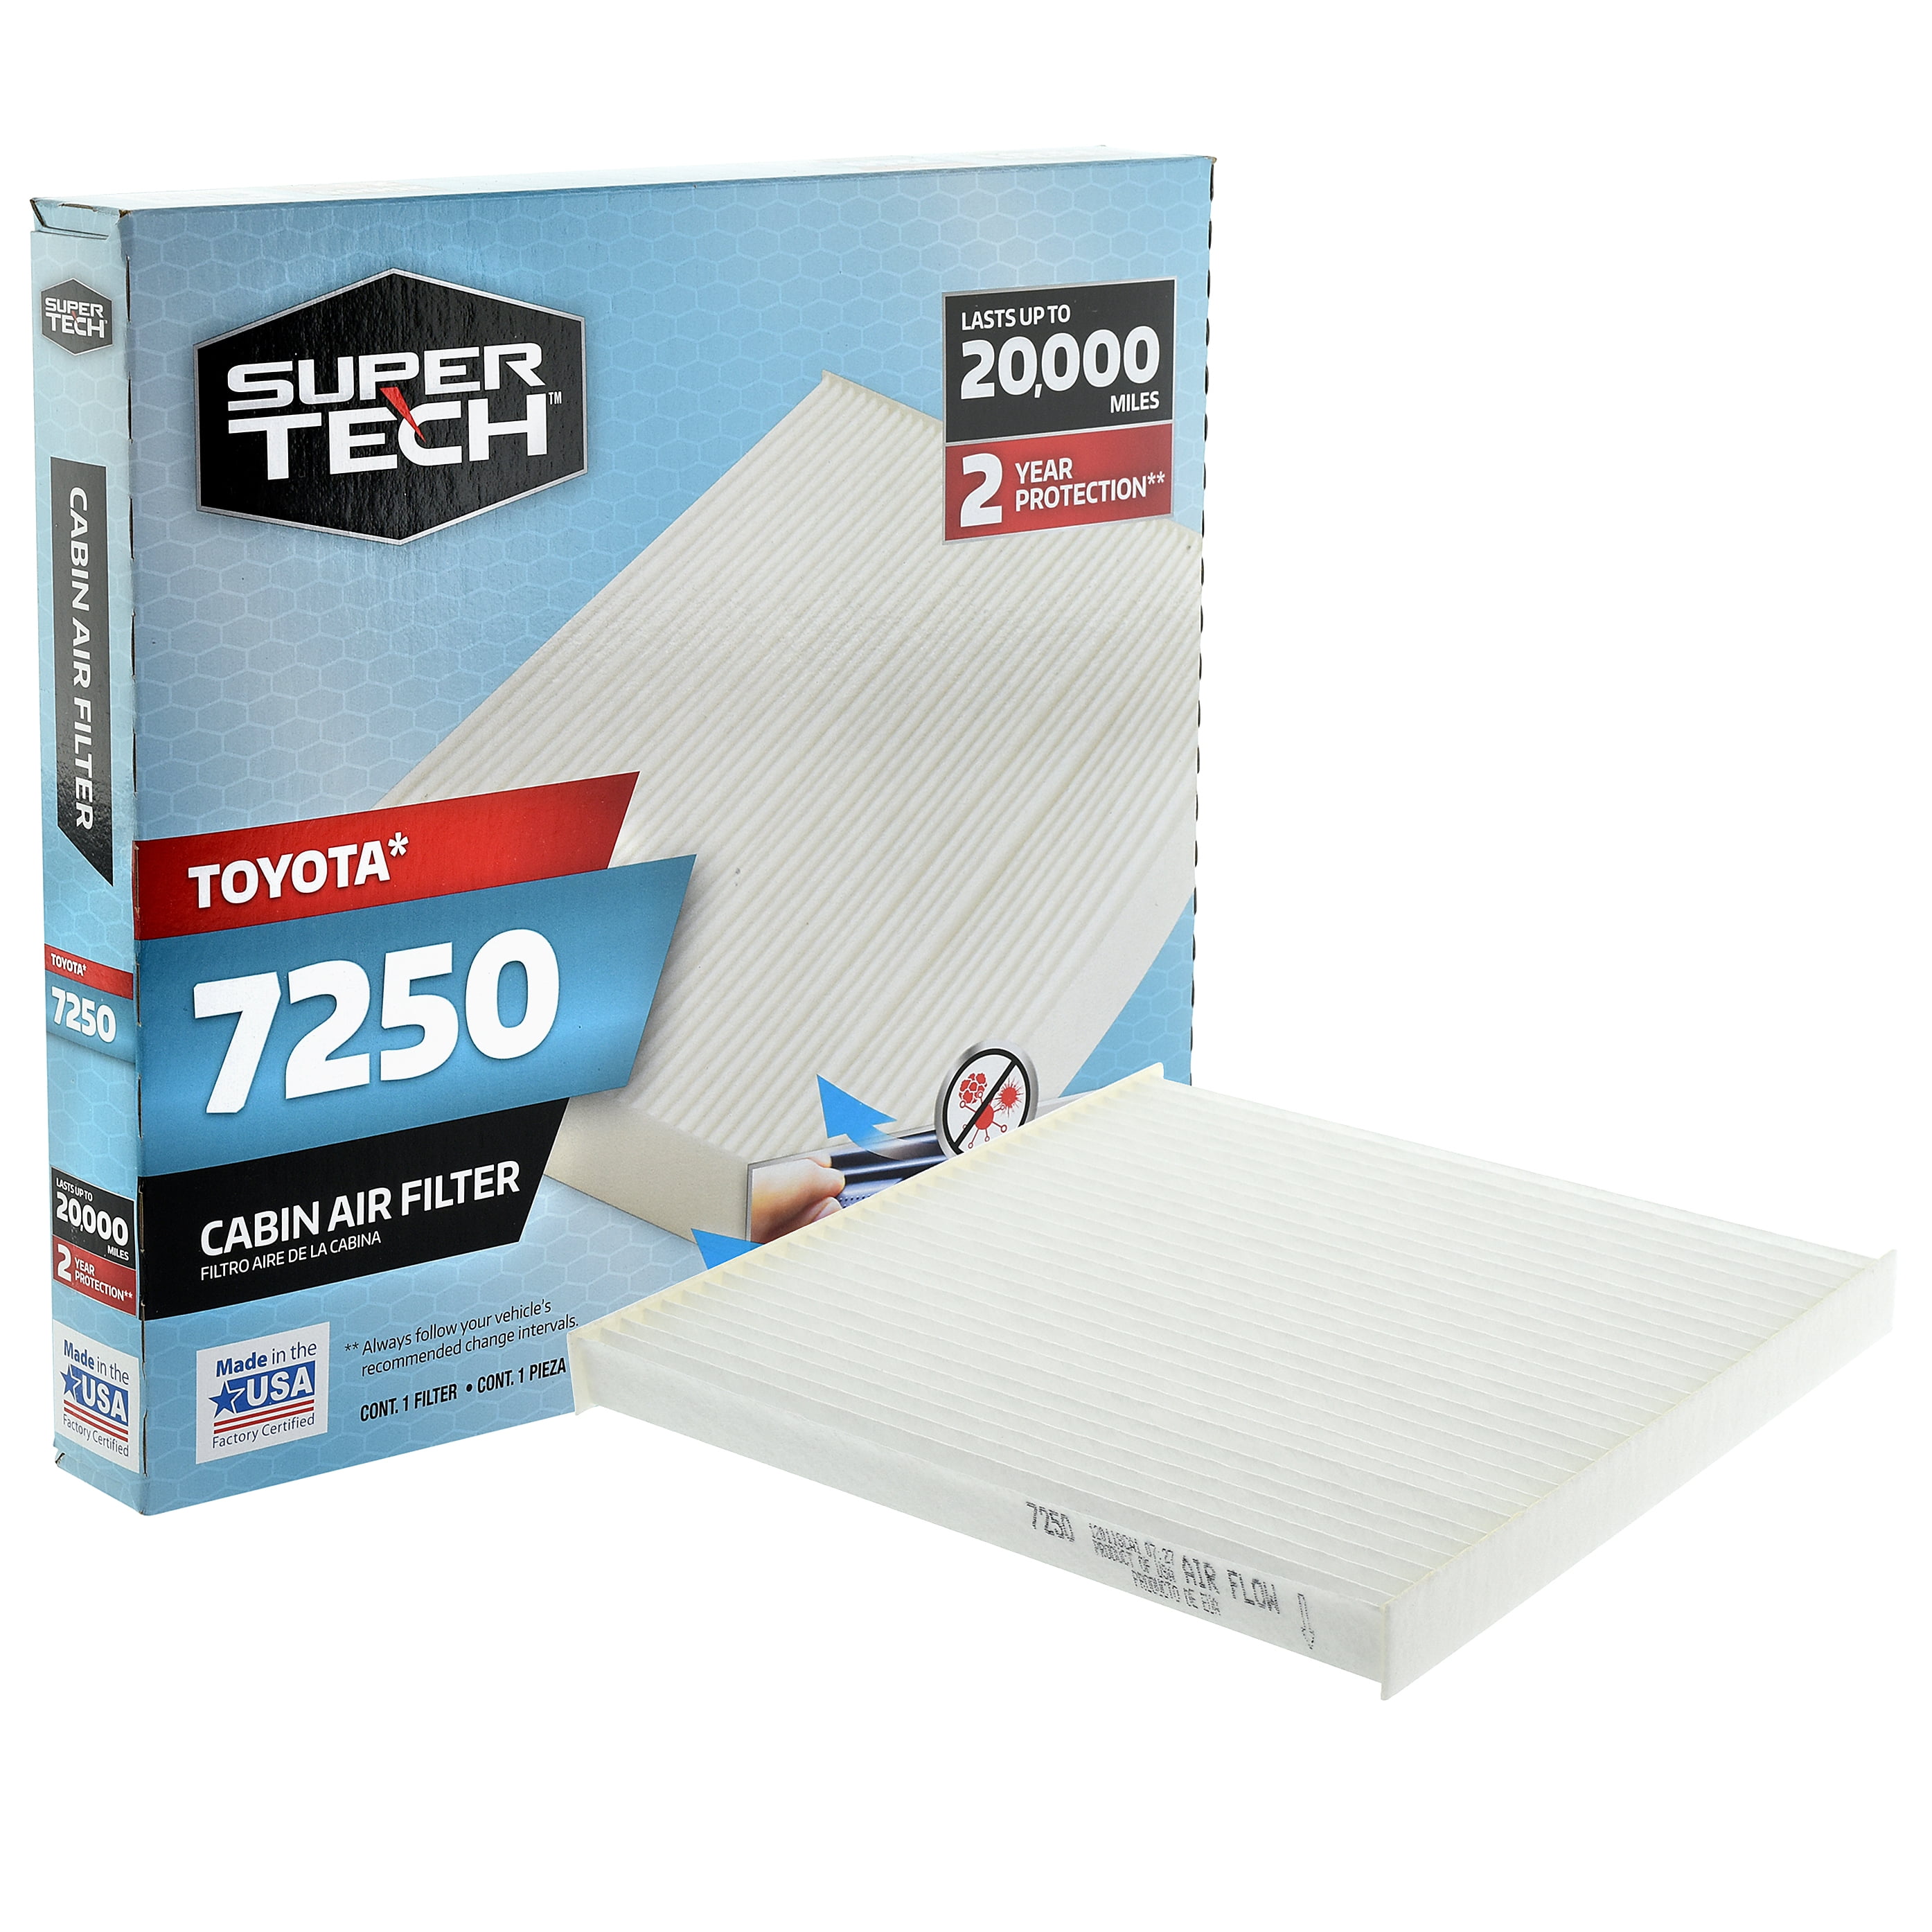 SuperTech Cabin Air Filter 7250, Replacement Air/Dust Filter for